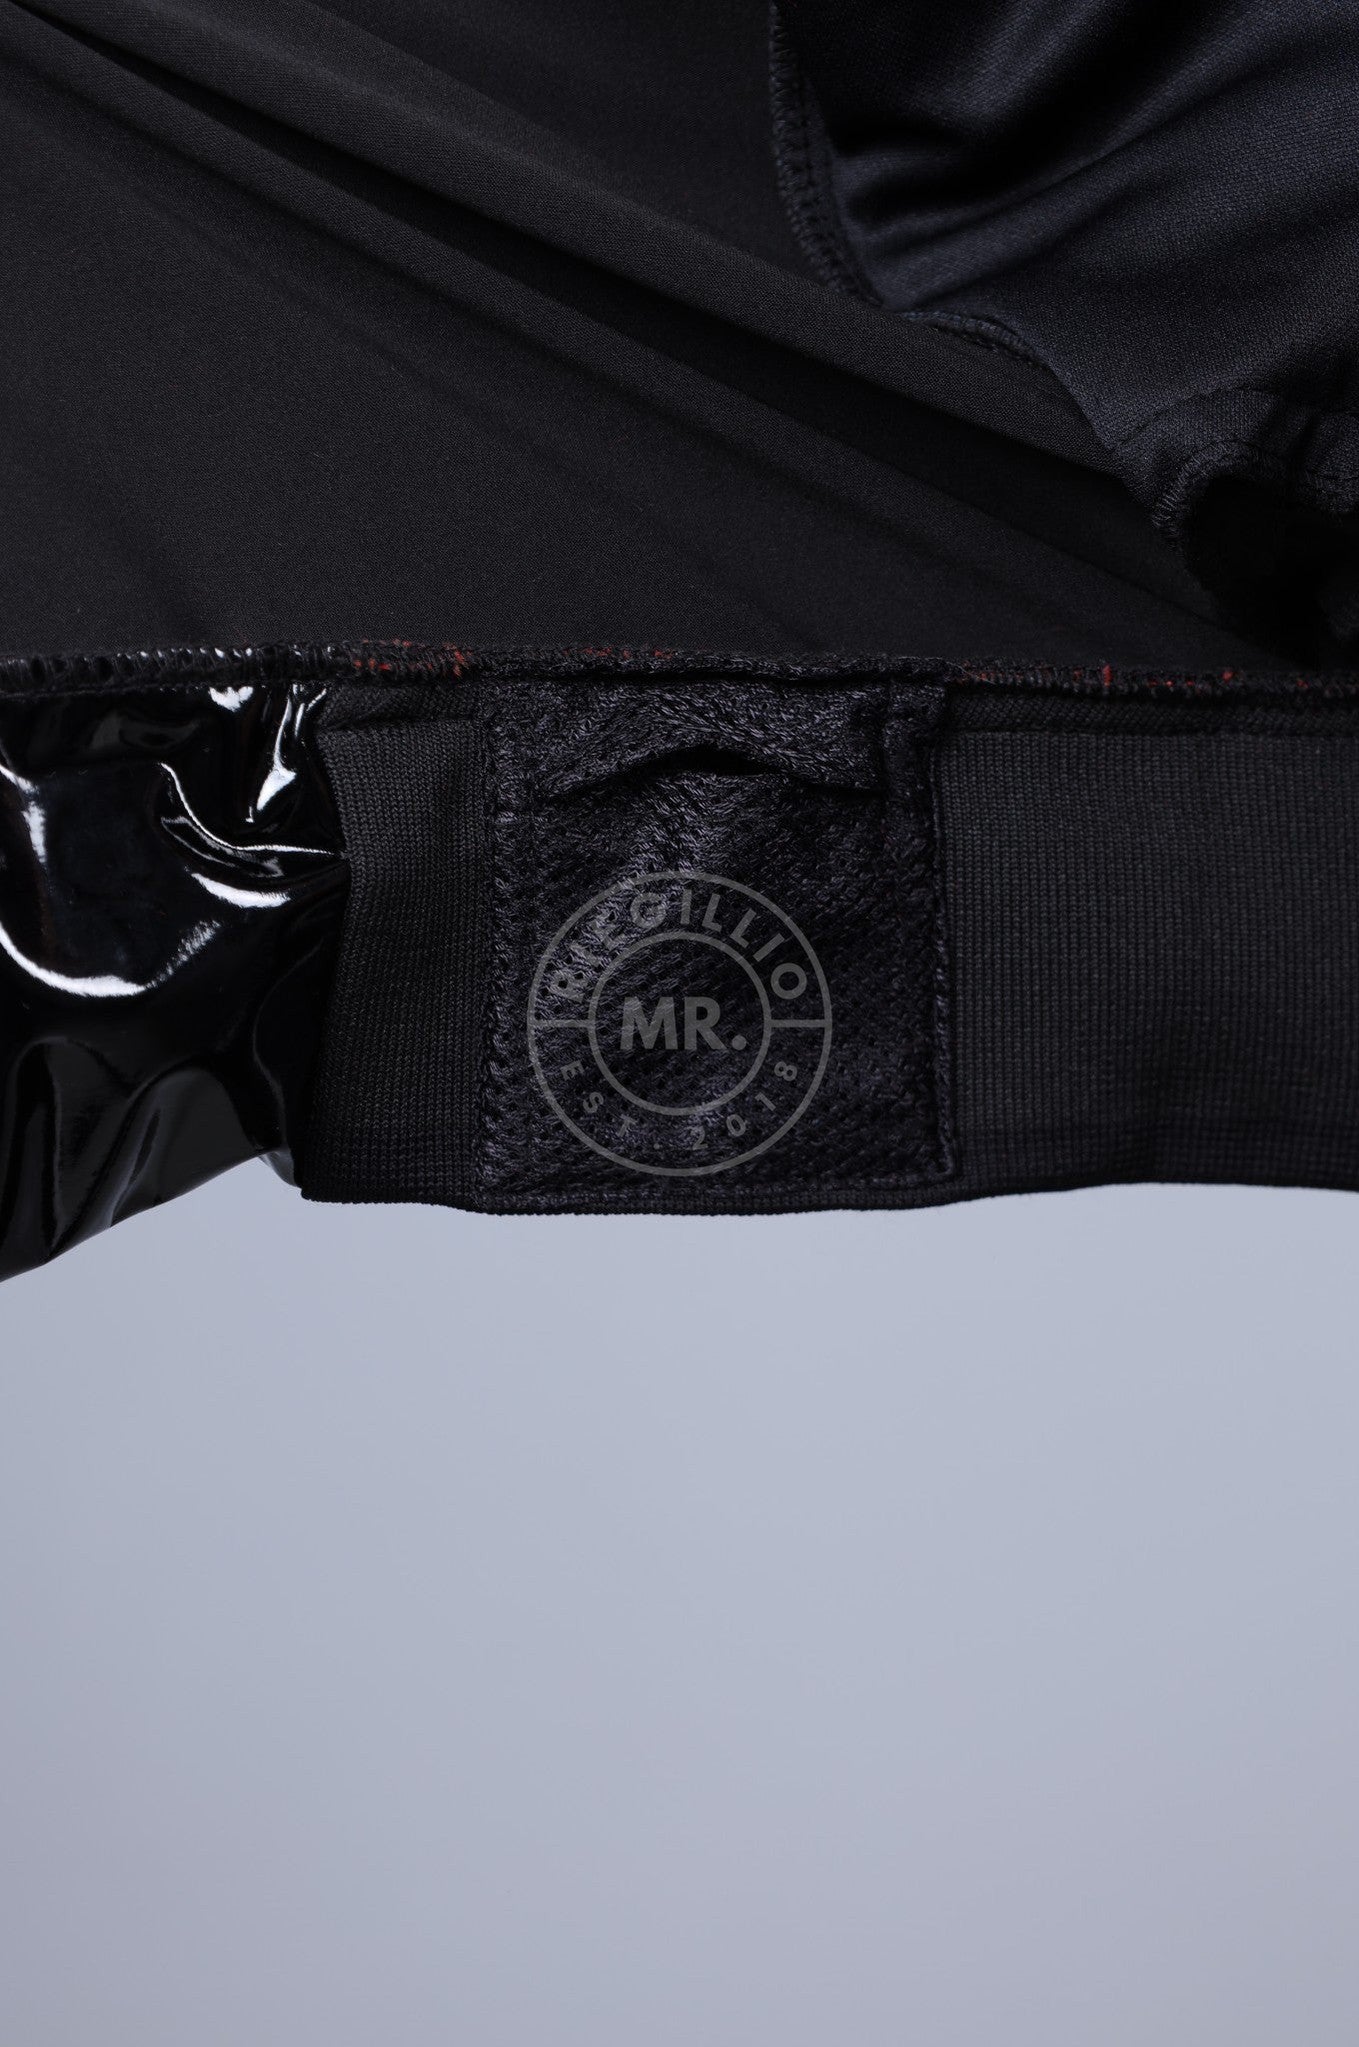 PVC 24 Tracksuit Jacket - Black at MR. Riegillio